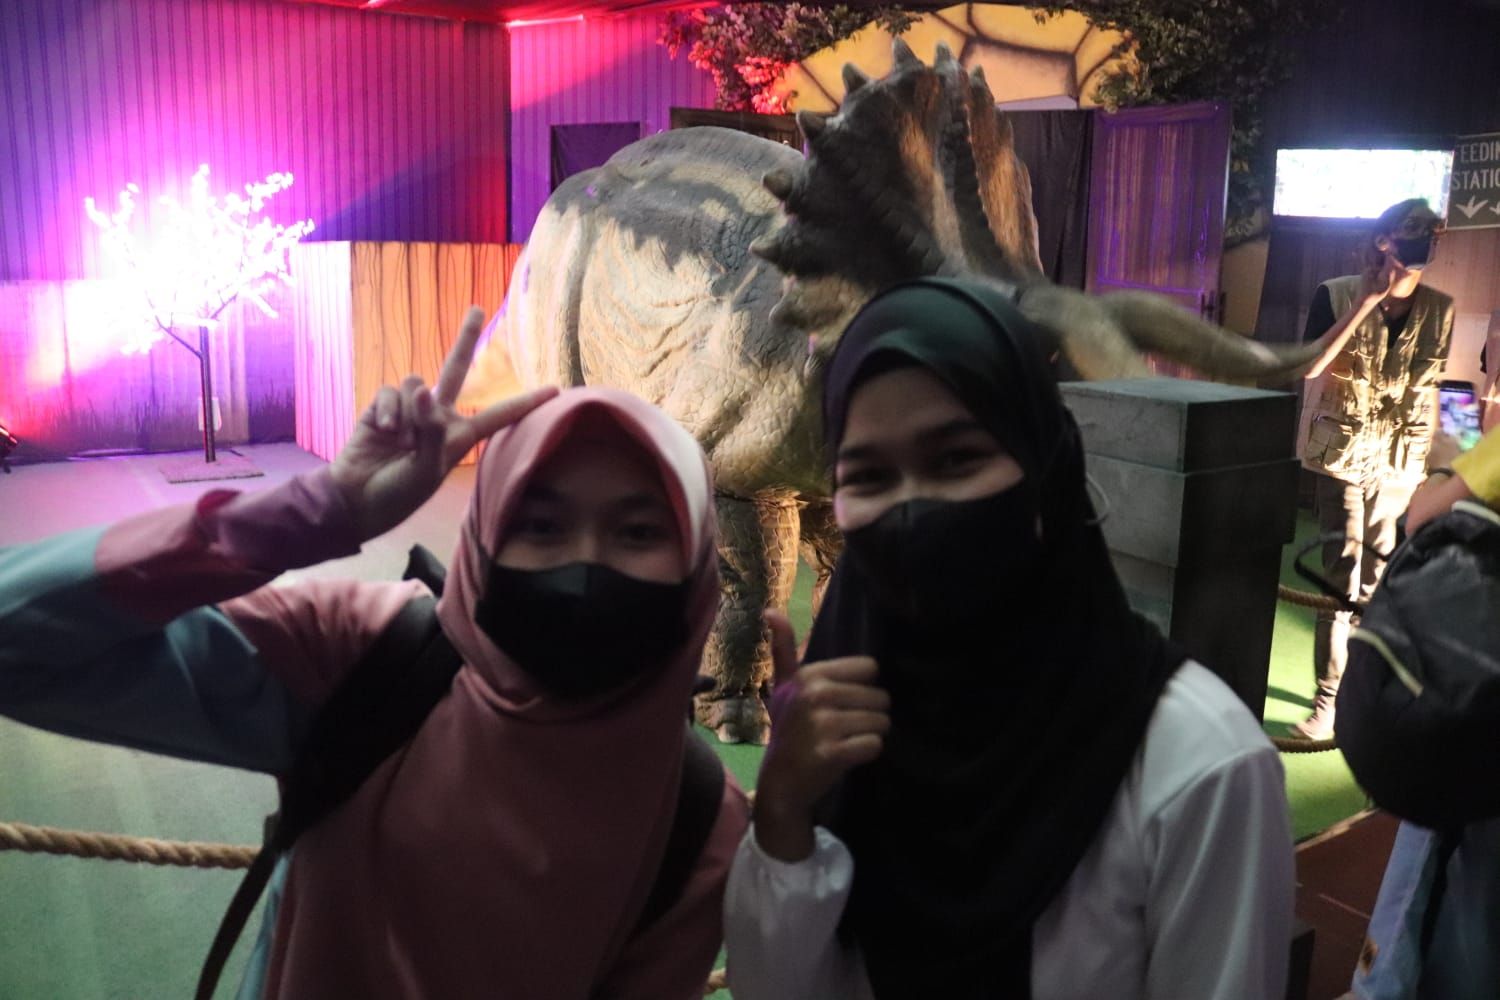 Libur Lebaran di Bandung? Nonton Dinosaurus dari Jarak Dekat Yuk! Cek Lokasi dan Langsung Buru Sensasinya